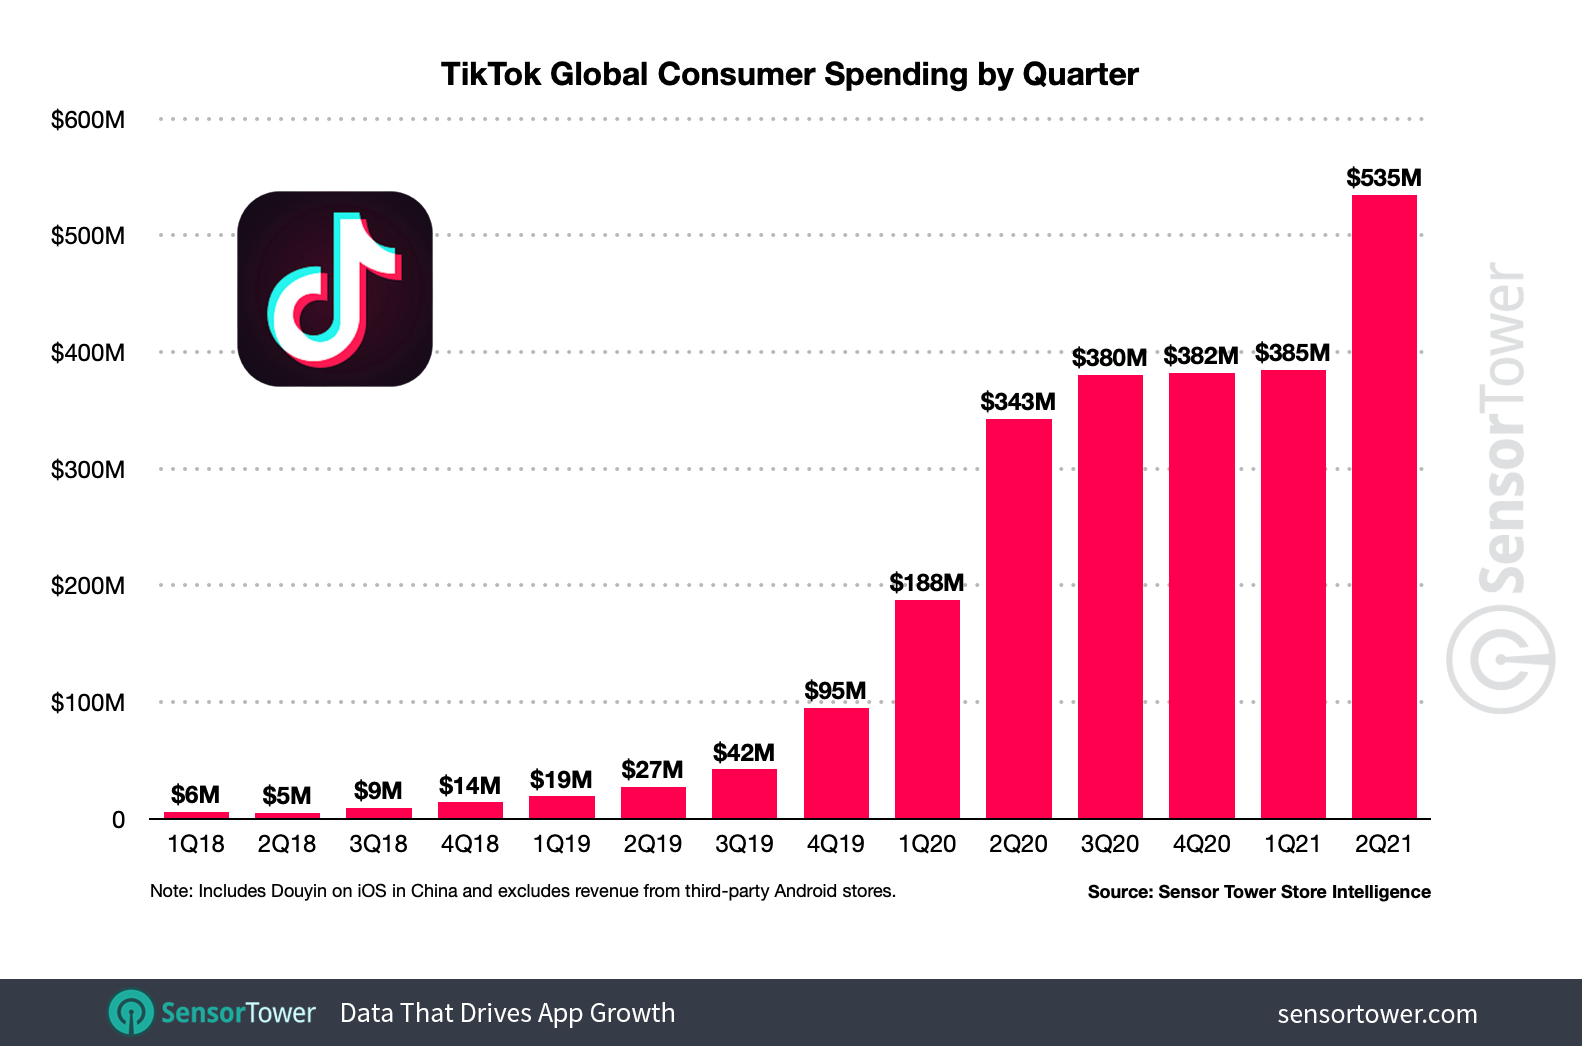 TikTok's quarterly revenue surged 39 percent in Q2 2021 to $534.6 million